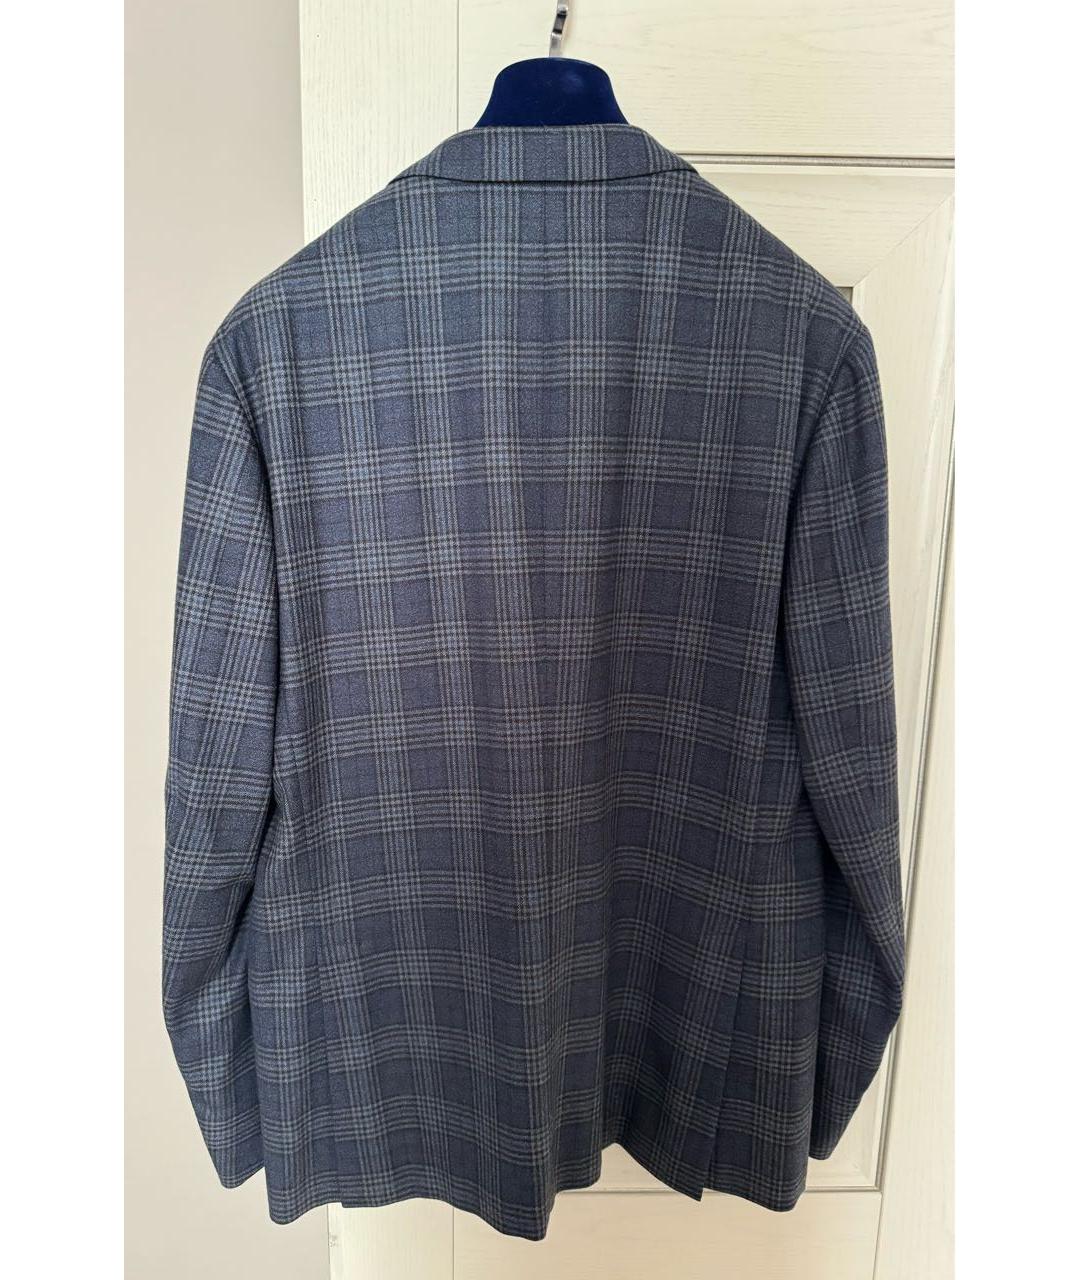 CORNELIANI Темно-синий шерстяной пиджак, фото 2